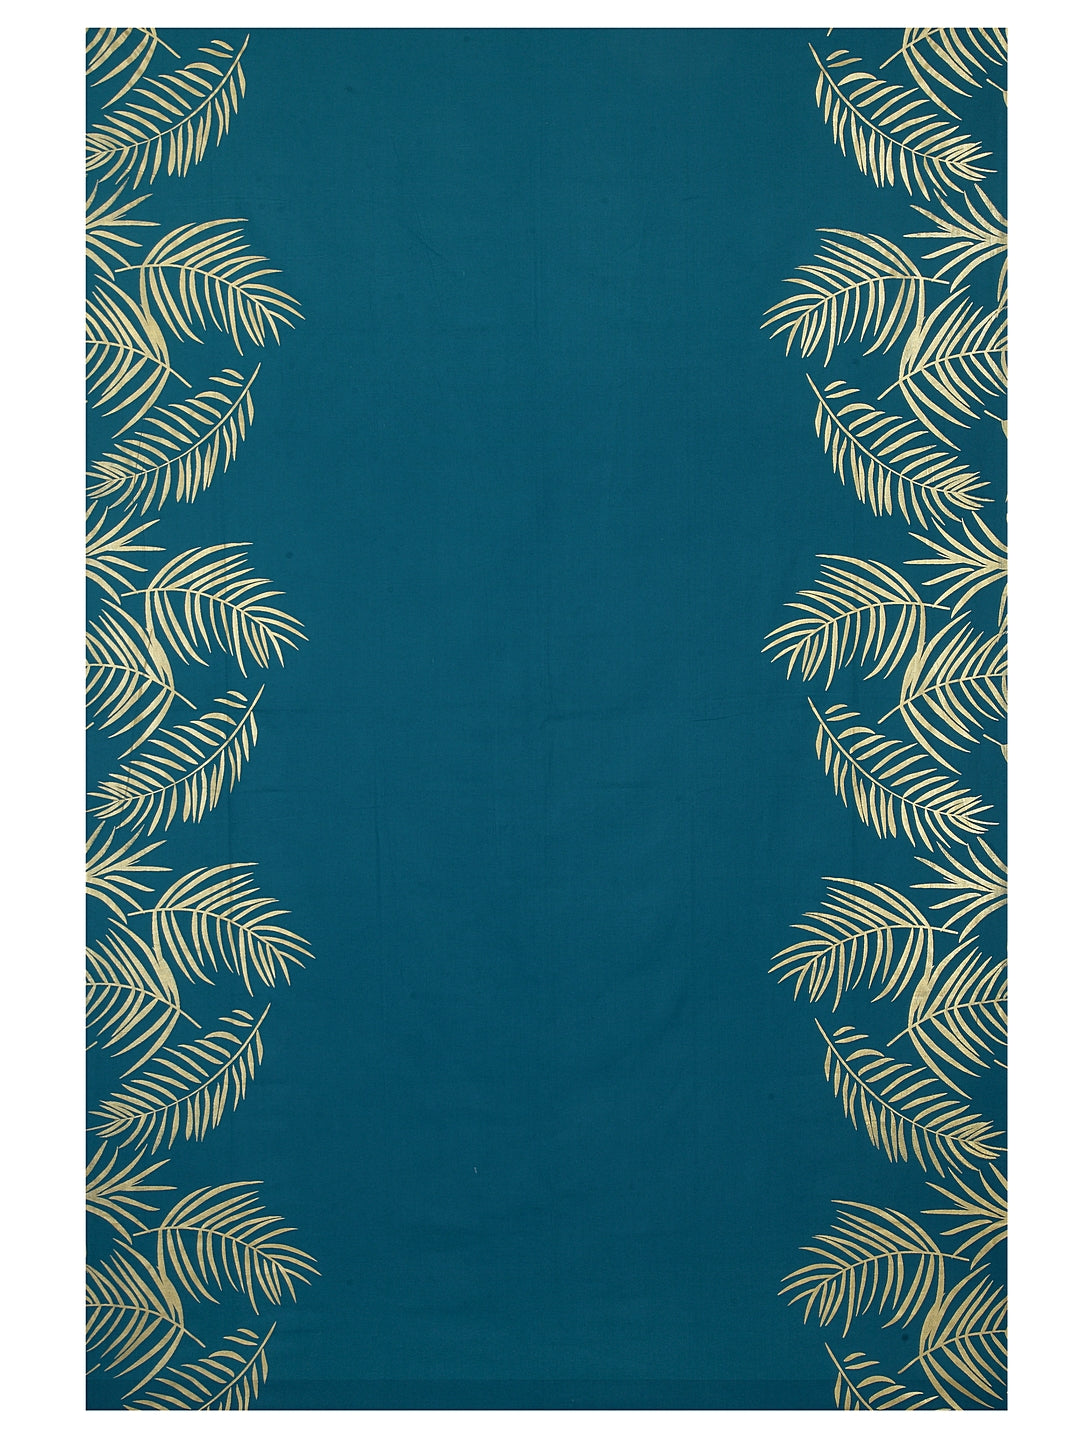 Blanc9 Gold Foil Palm Leaf Printed Table Cloth